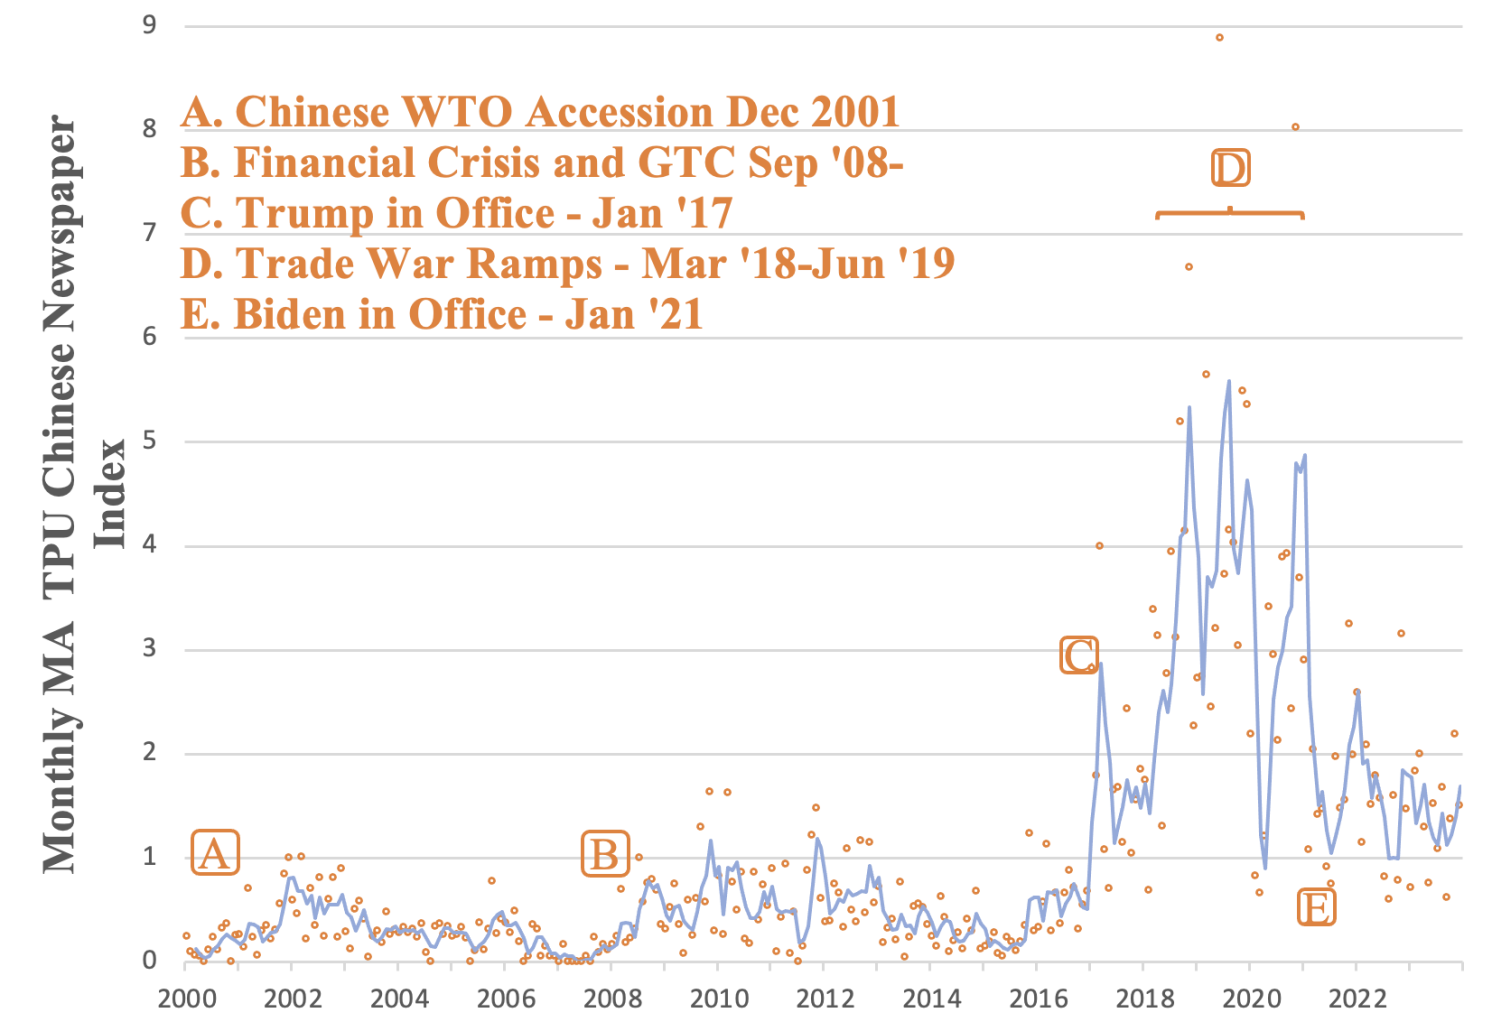 Figure 1 China’s TPU News Index, 2000-2022